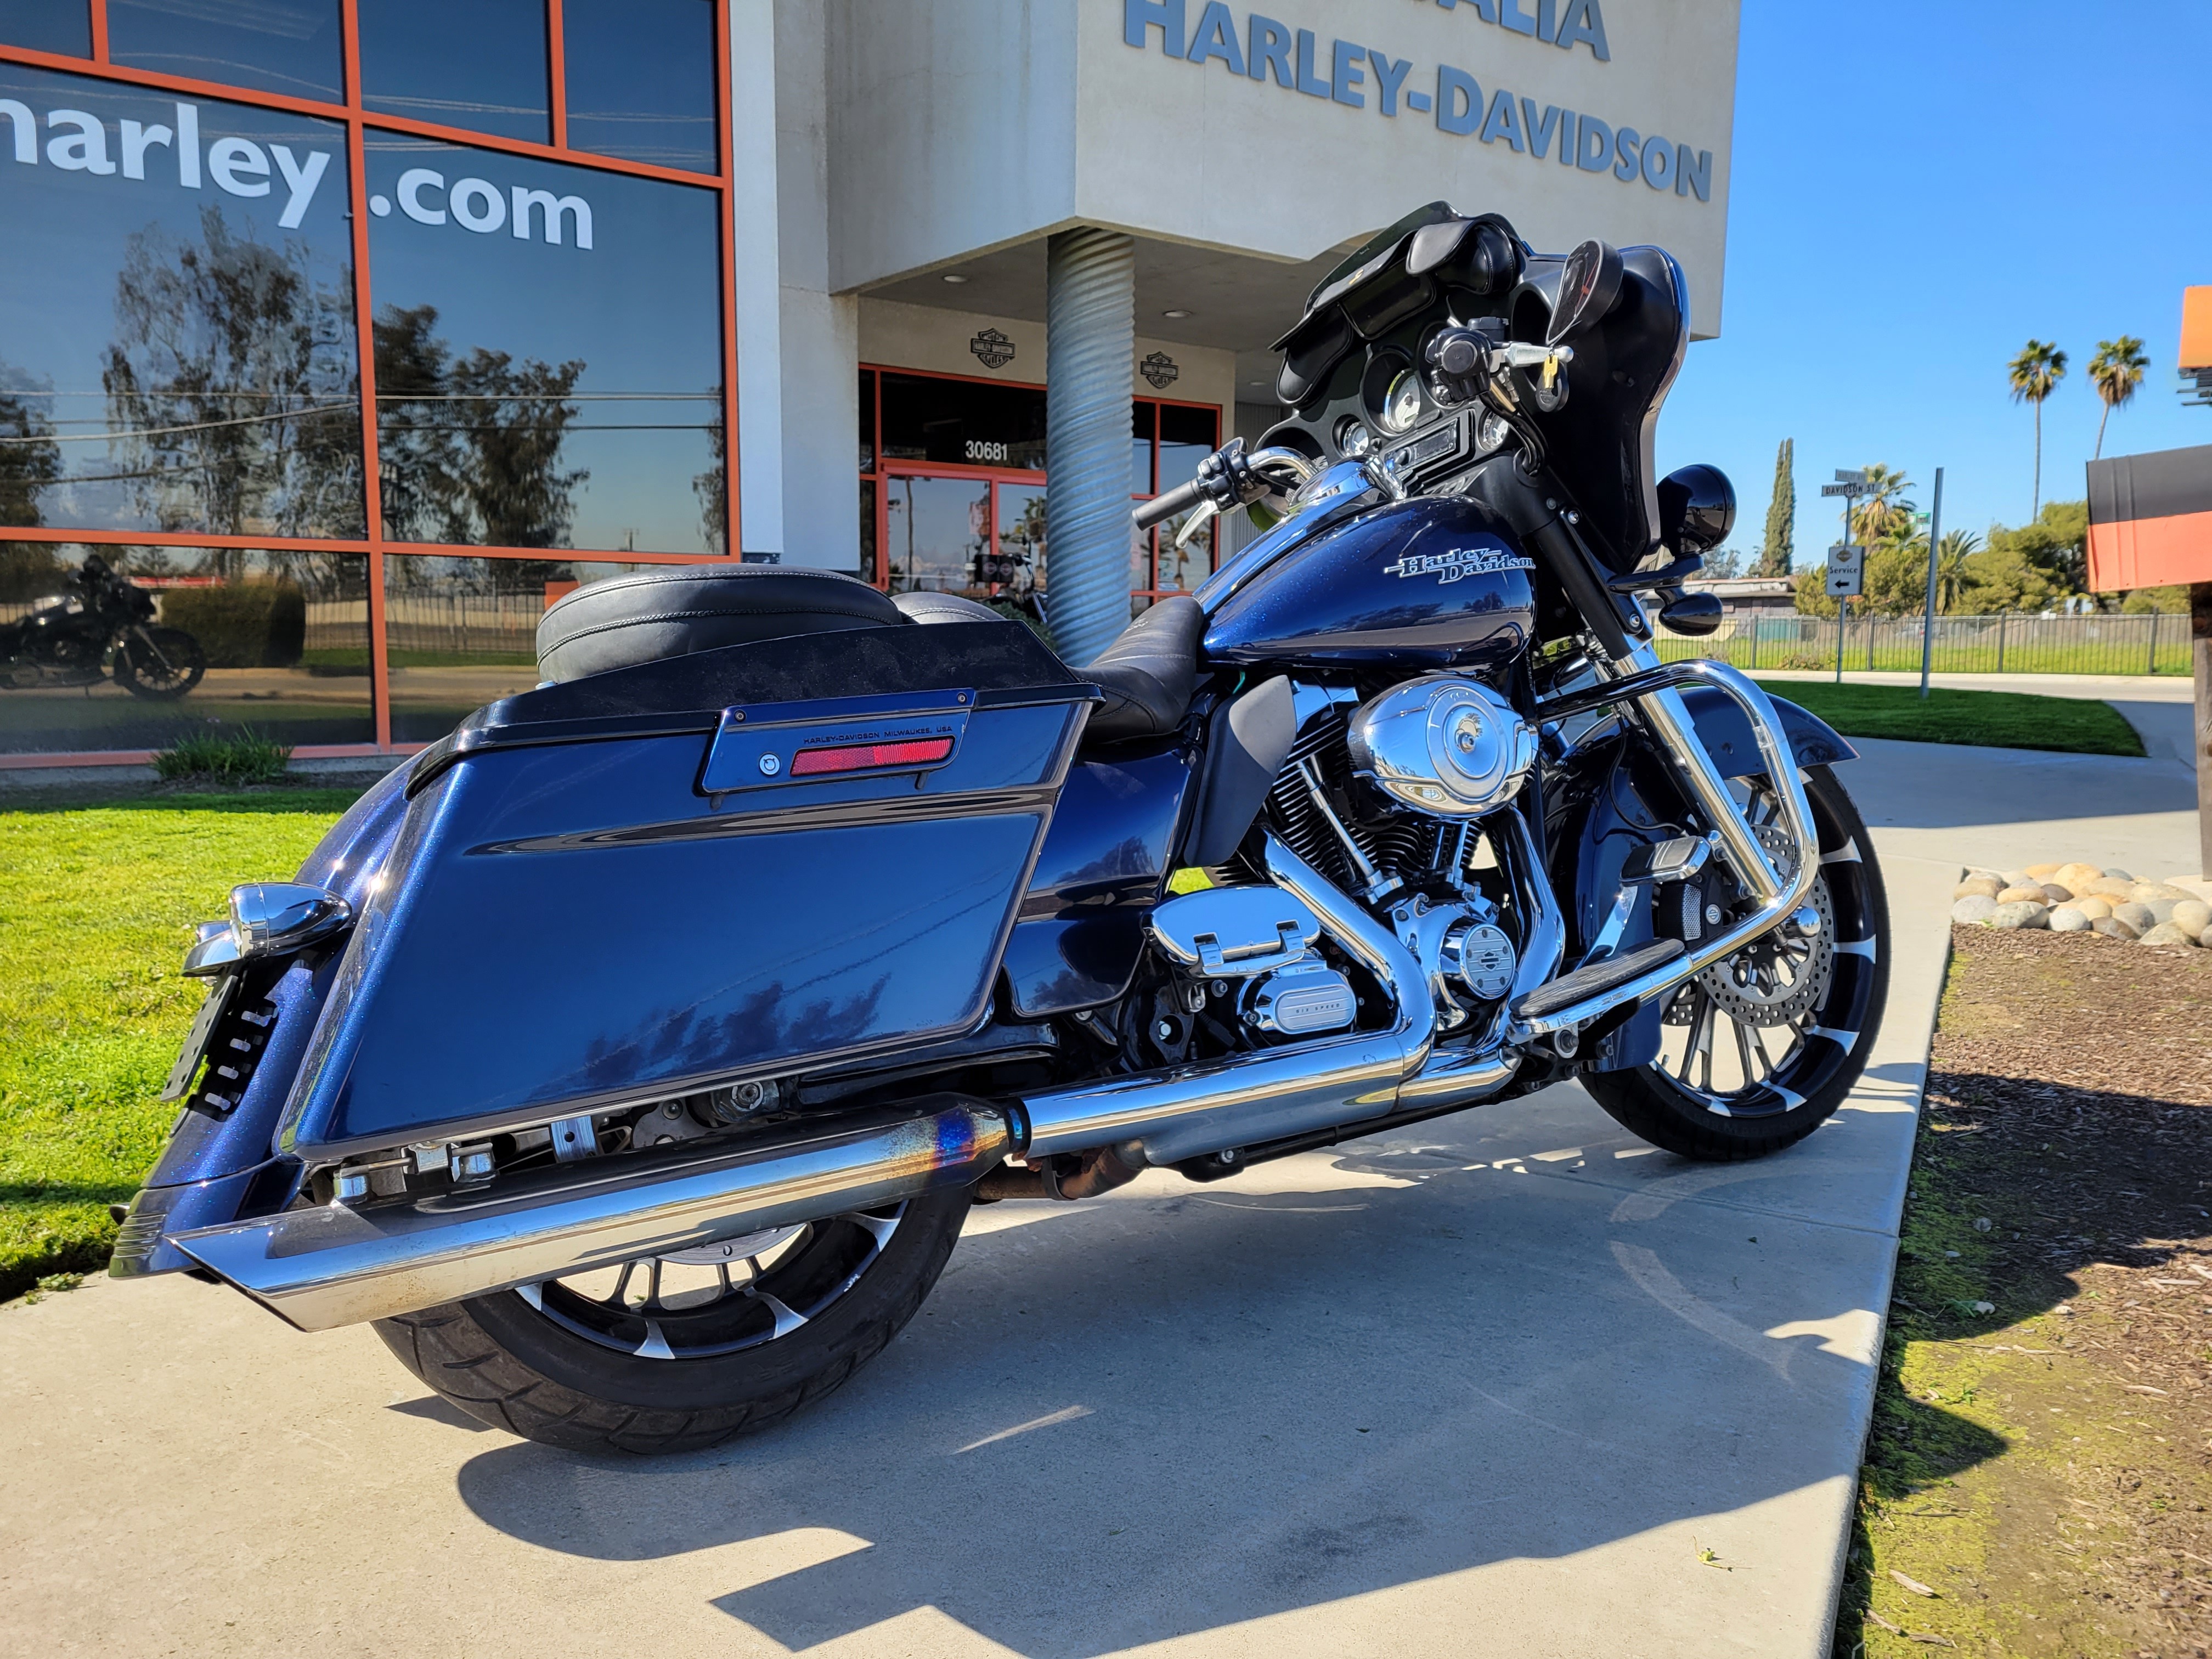 2012 Harley-Davidson Street Glide Base at Visalia Harley-Davidson